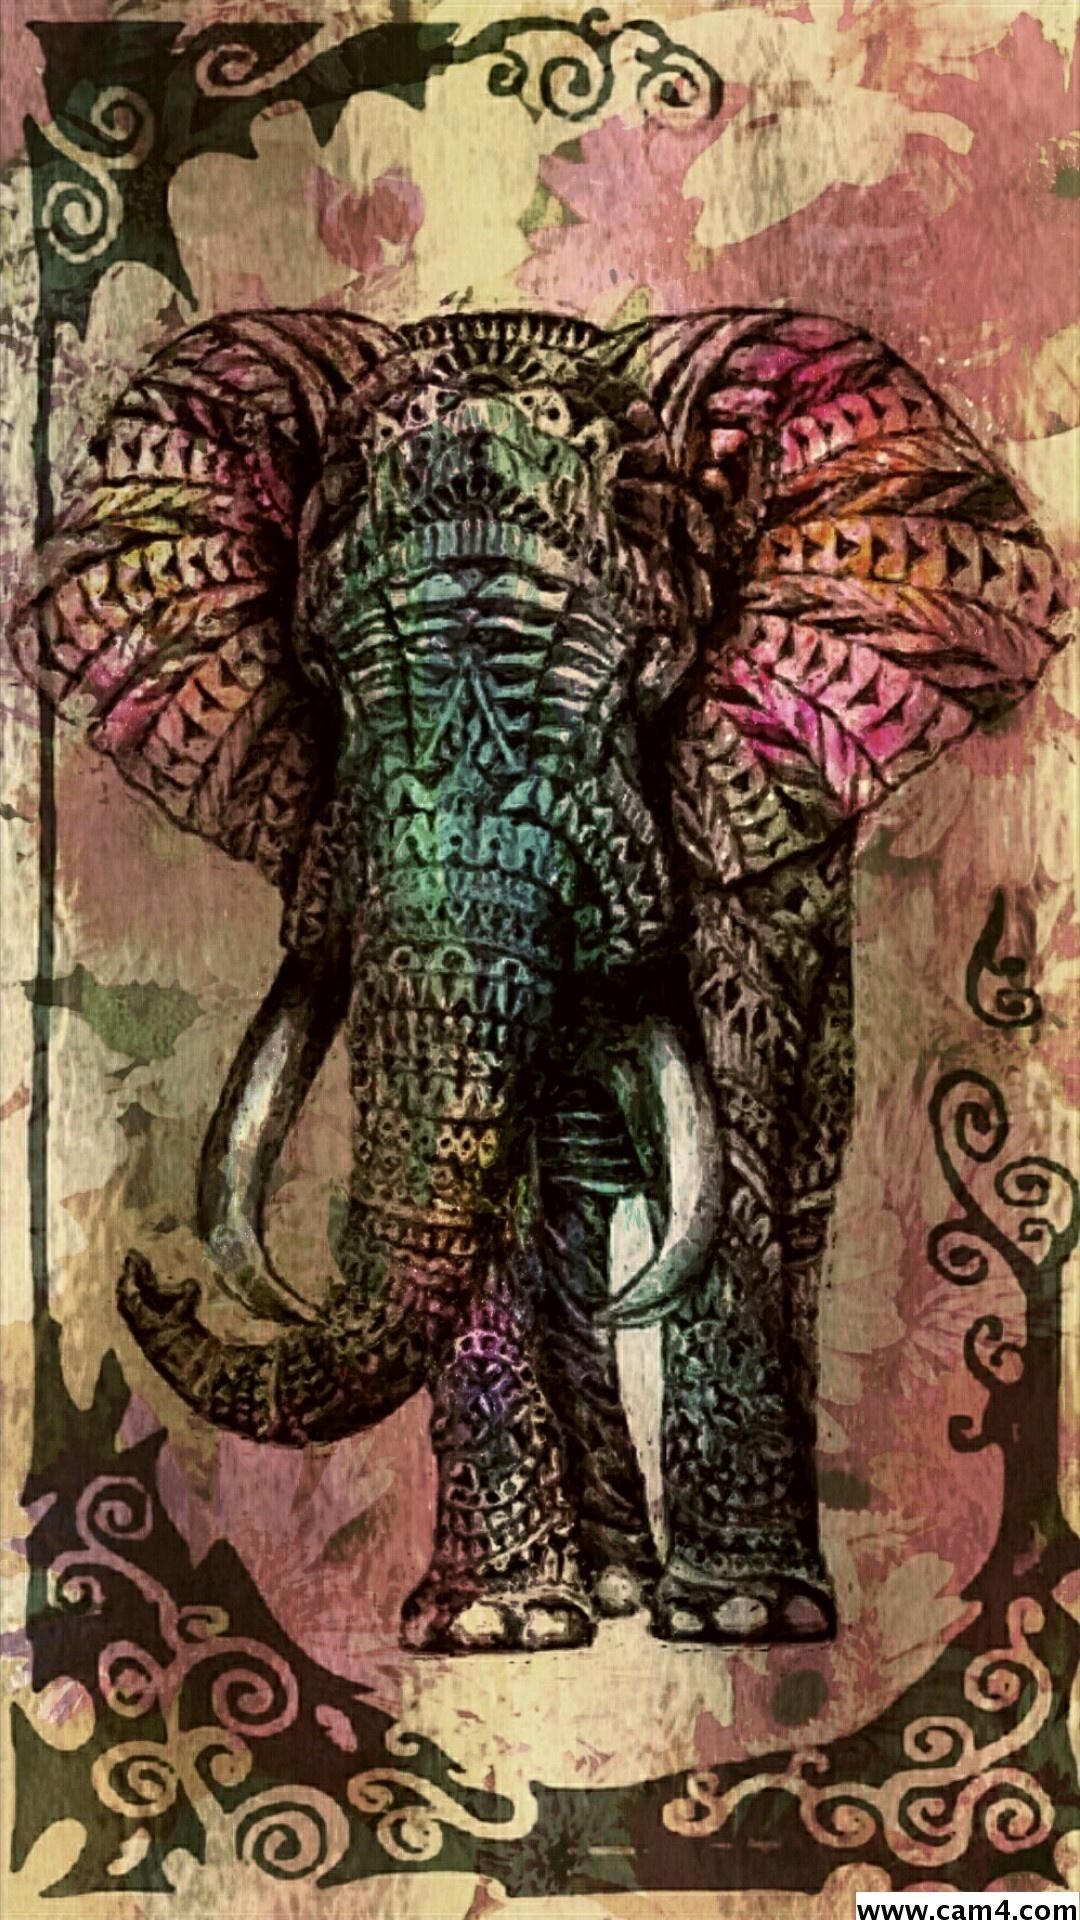 Elephant iPhone wallpaper high quality